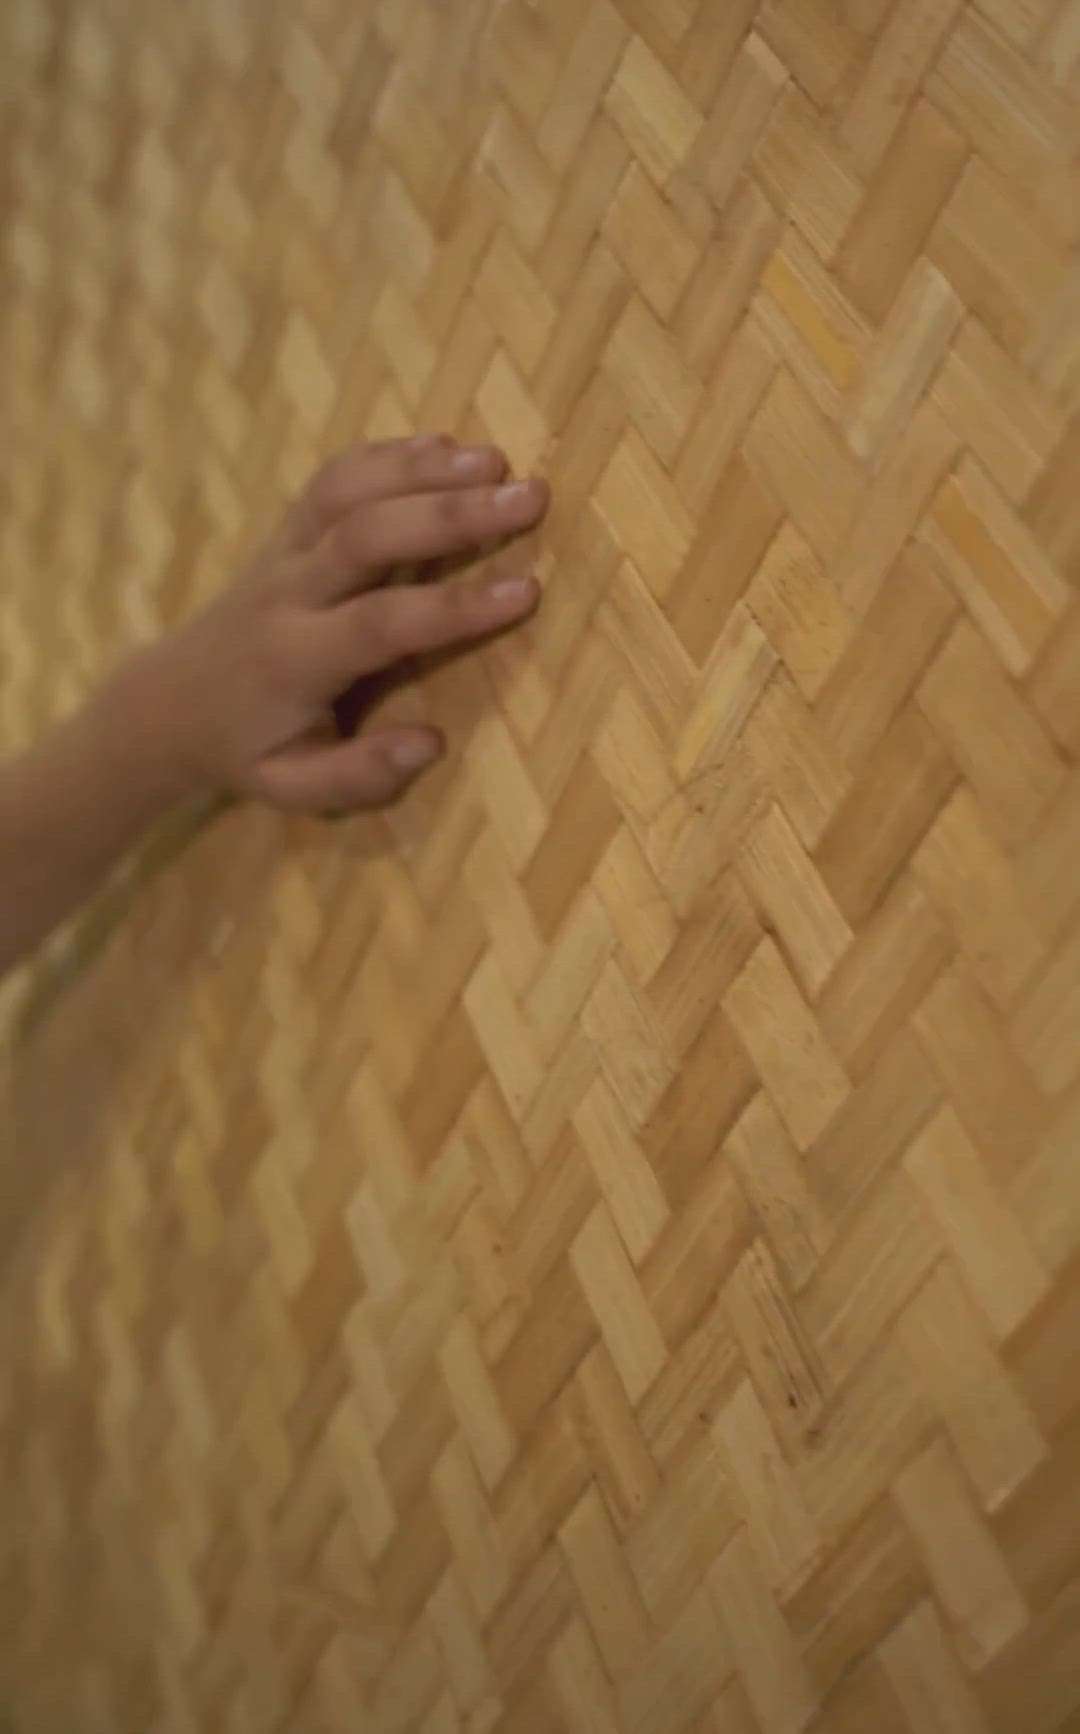 Big Bamboo Boards
Small Bamboo Boards 

#Architect #architecturedesigns #Architectural&Interior #InteriorDesigner #Designs #delhiinteriors